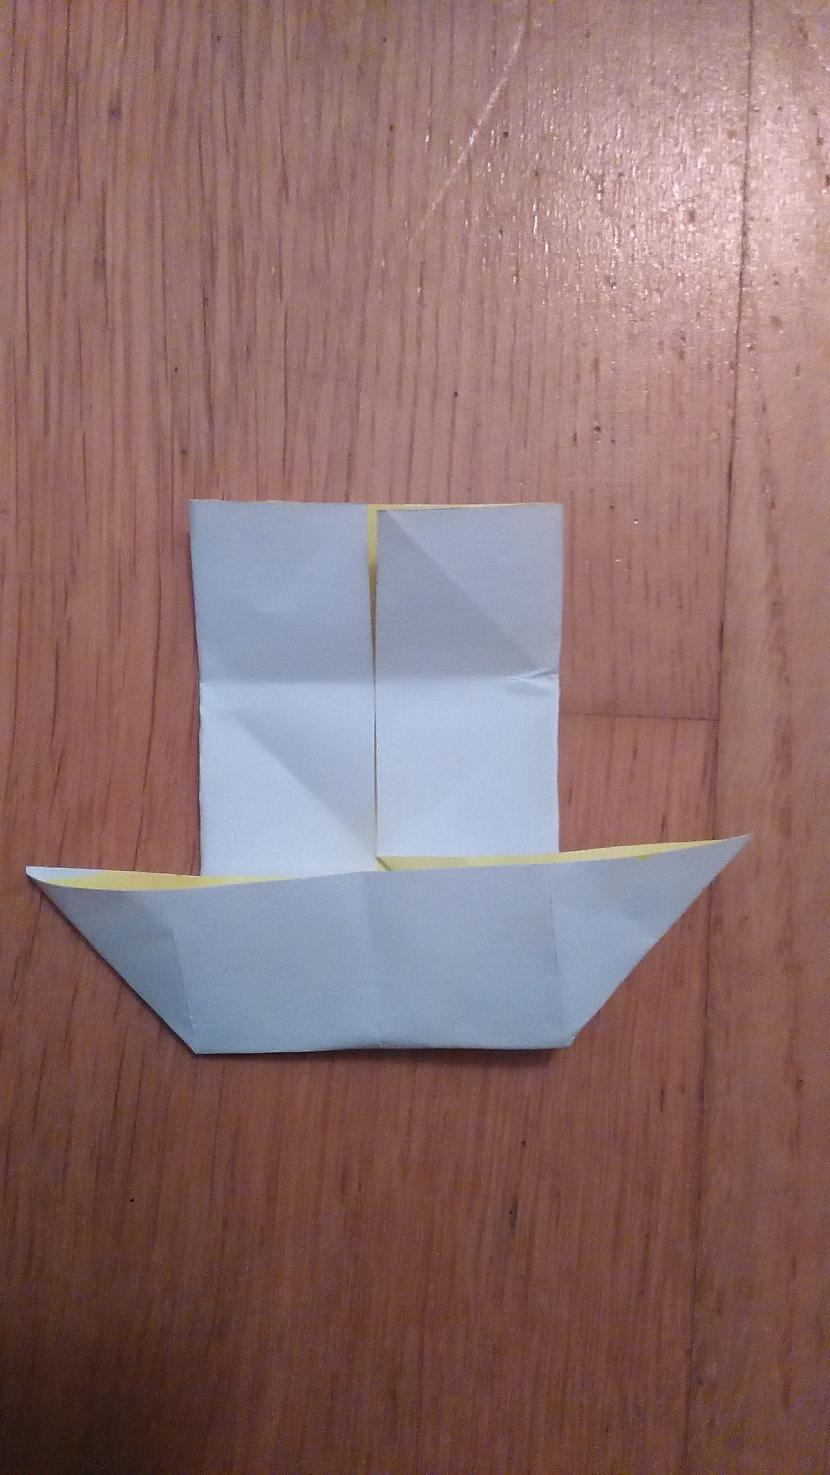 Lai veidojās scaronāds te... Autors: Emchiks Origami "ninja star"